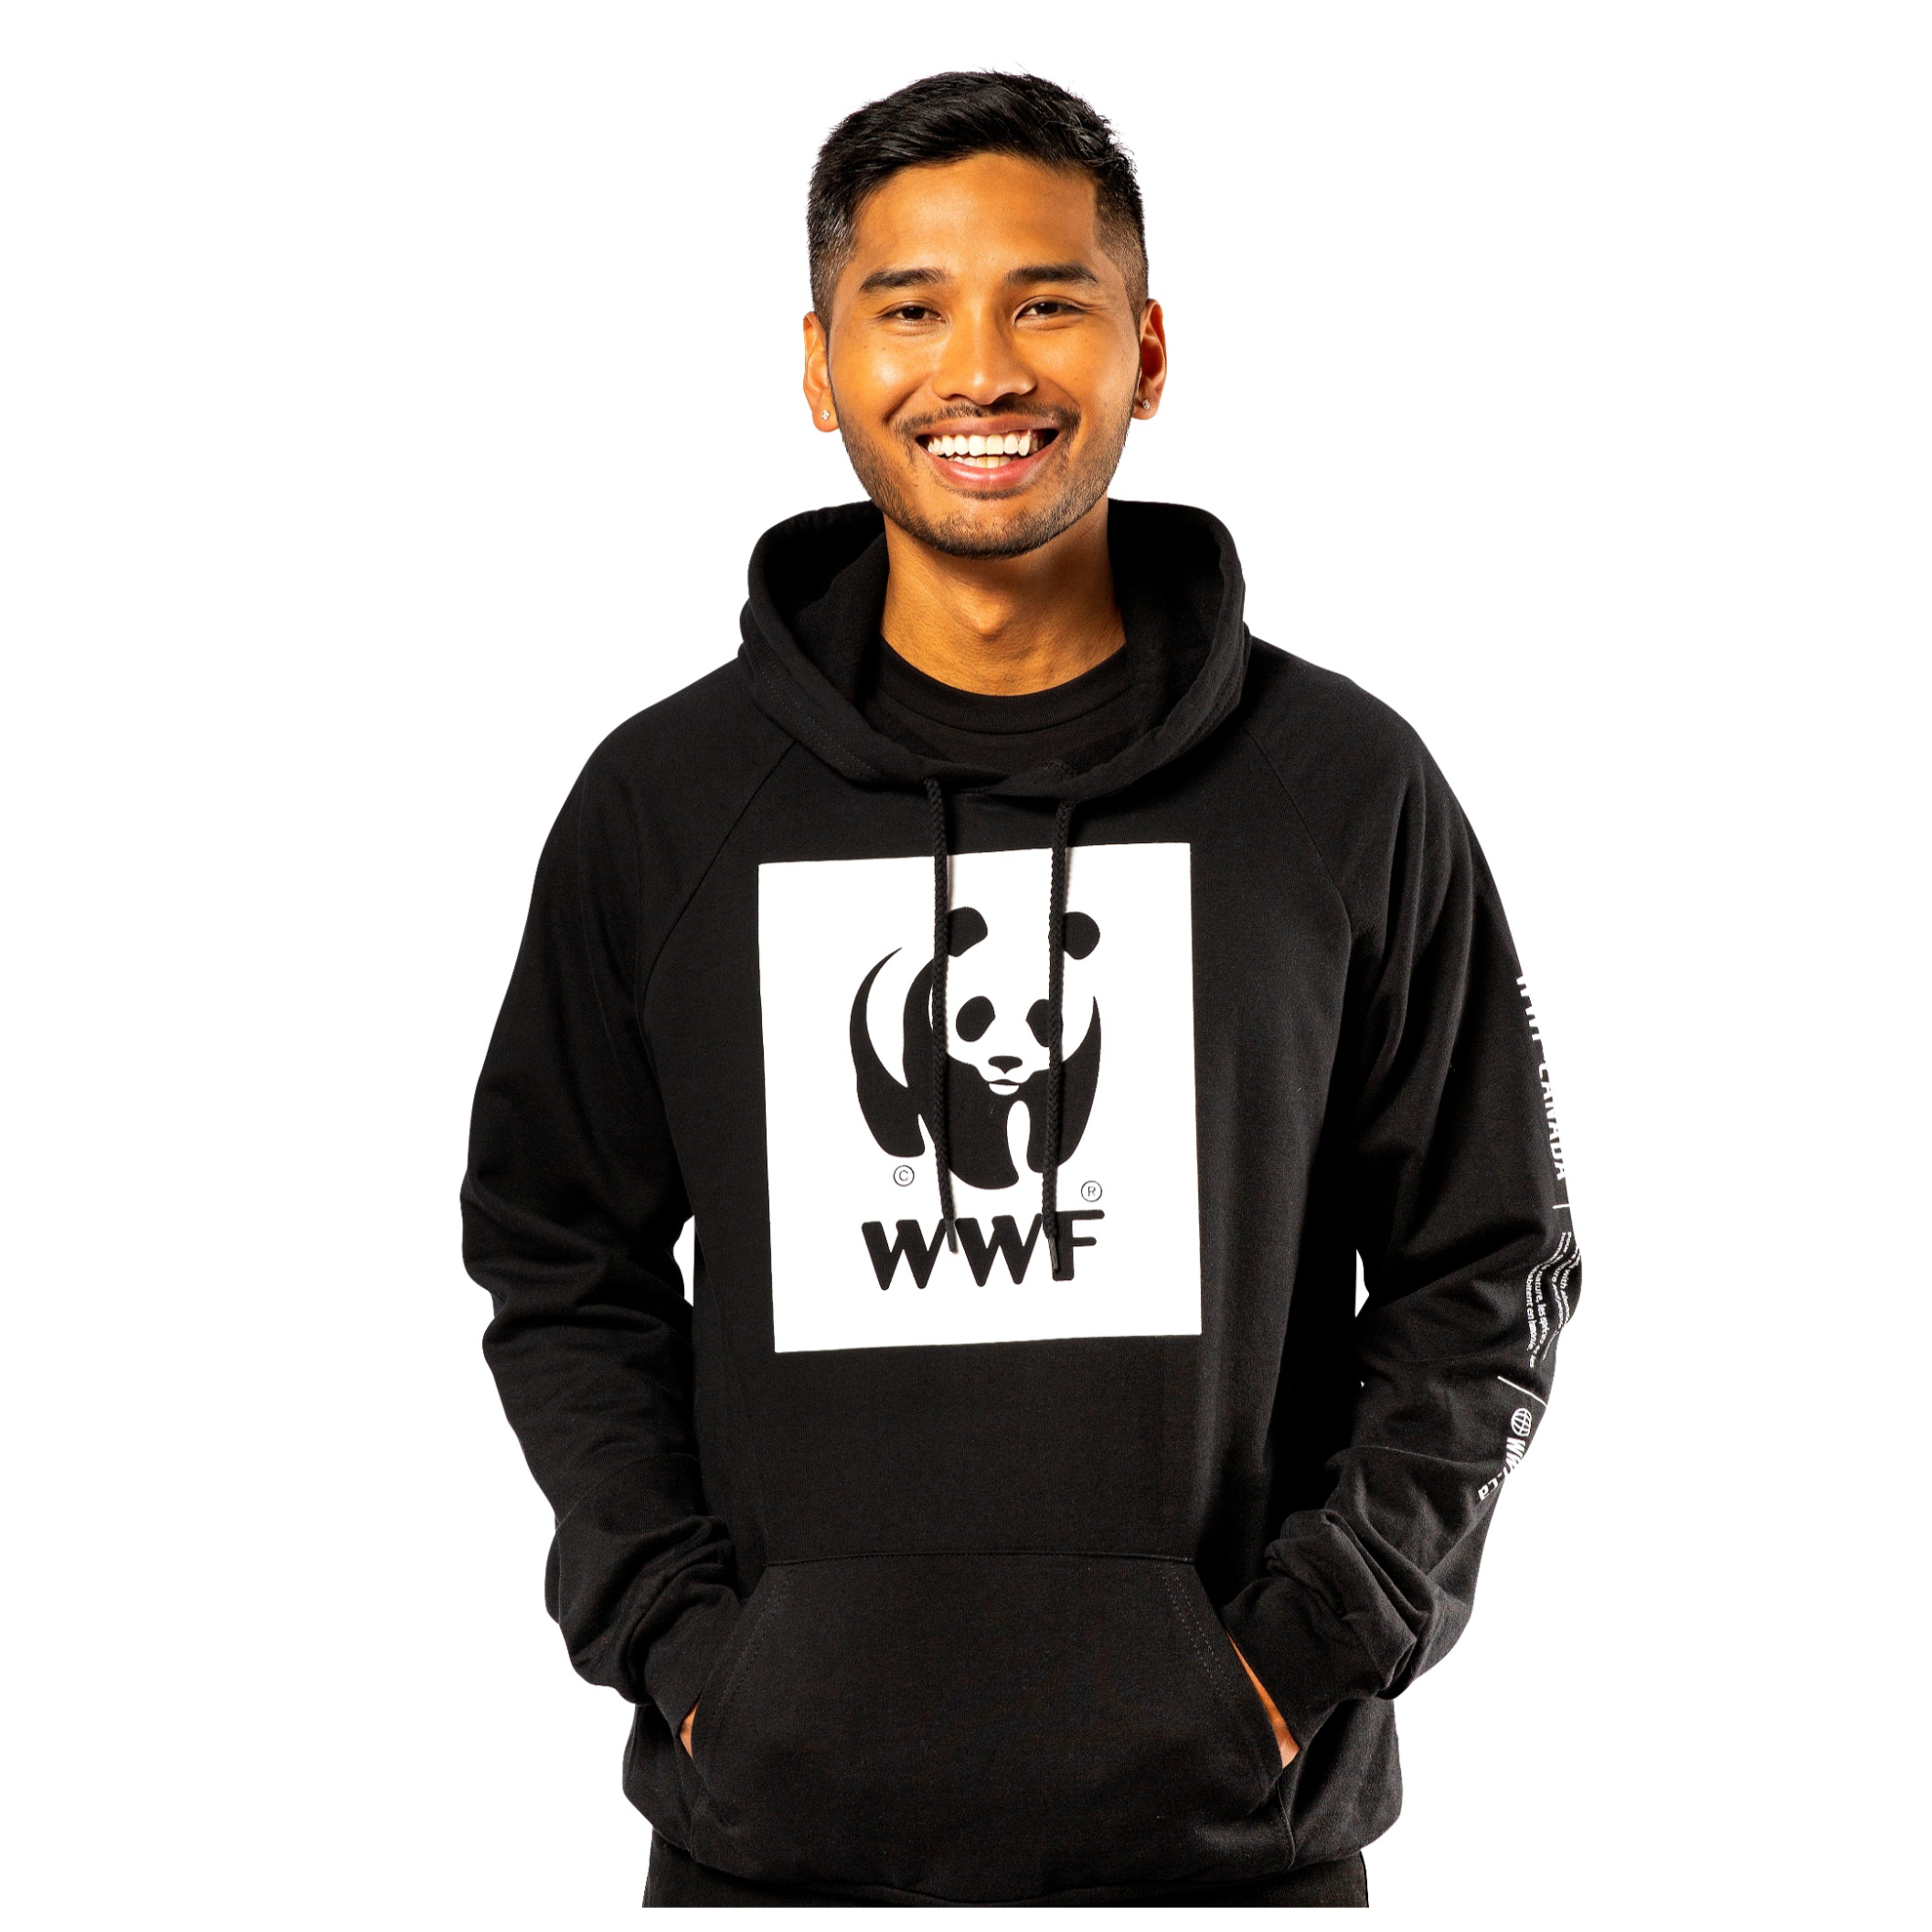 Male modelling the black unisex hooded sweatshirt featuring the white panda logo